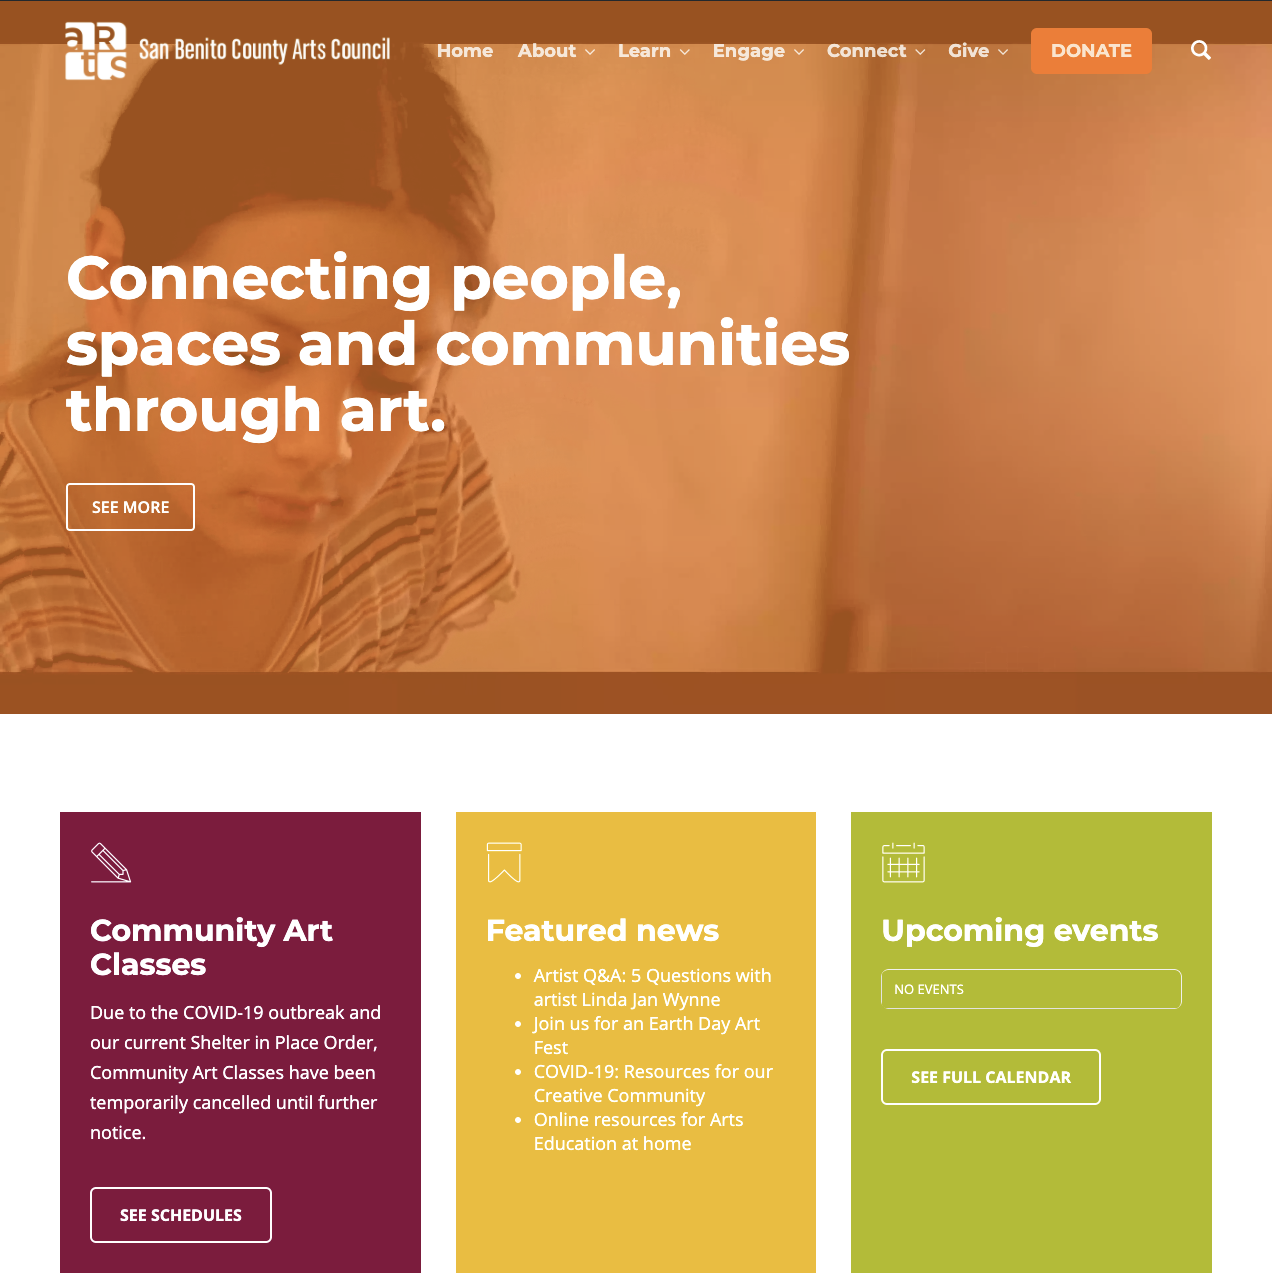 San Benito County Arts Council website home page design